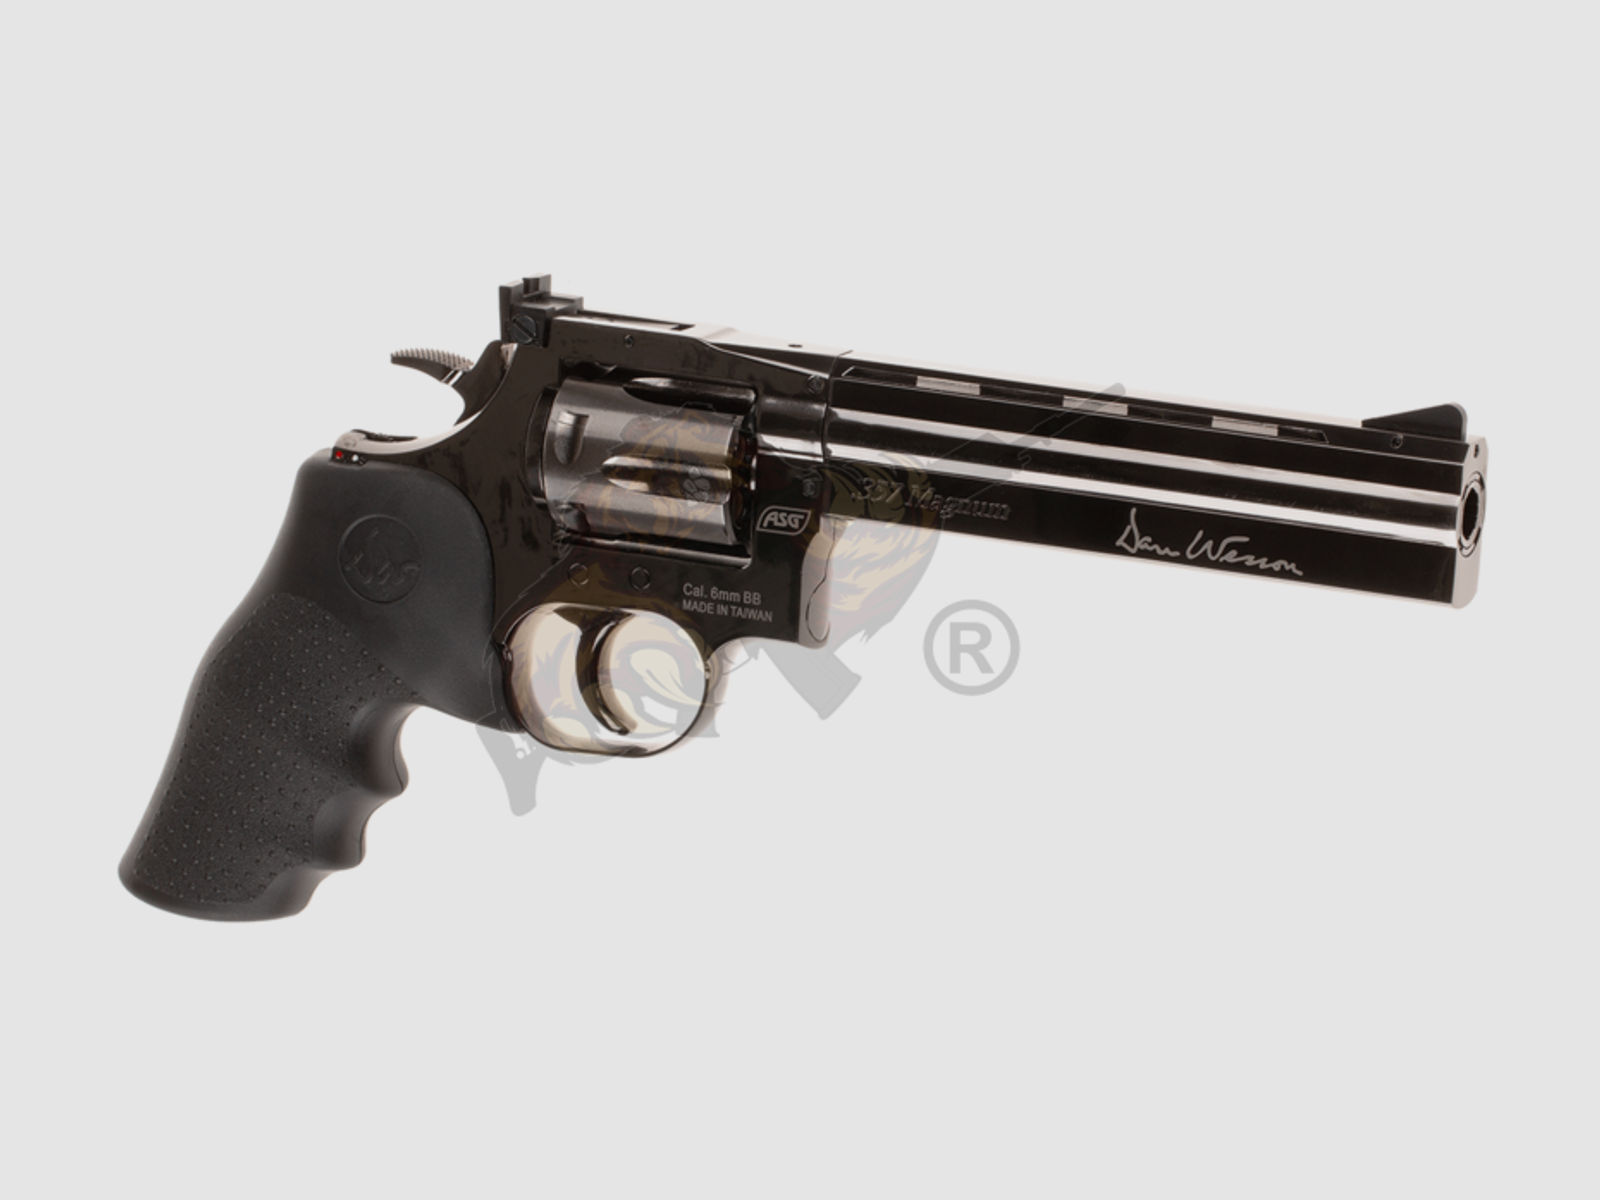 Dan Wesson 715 Steel Grey 6 Inch Revolver Full Metal Co2 -F-